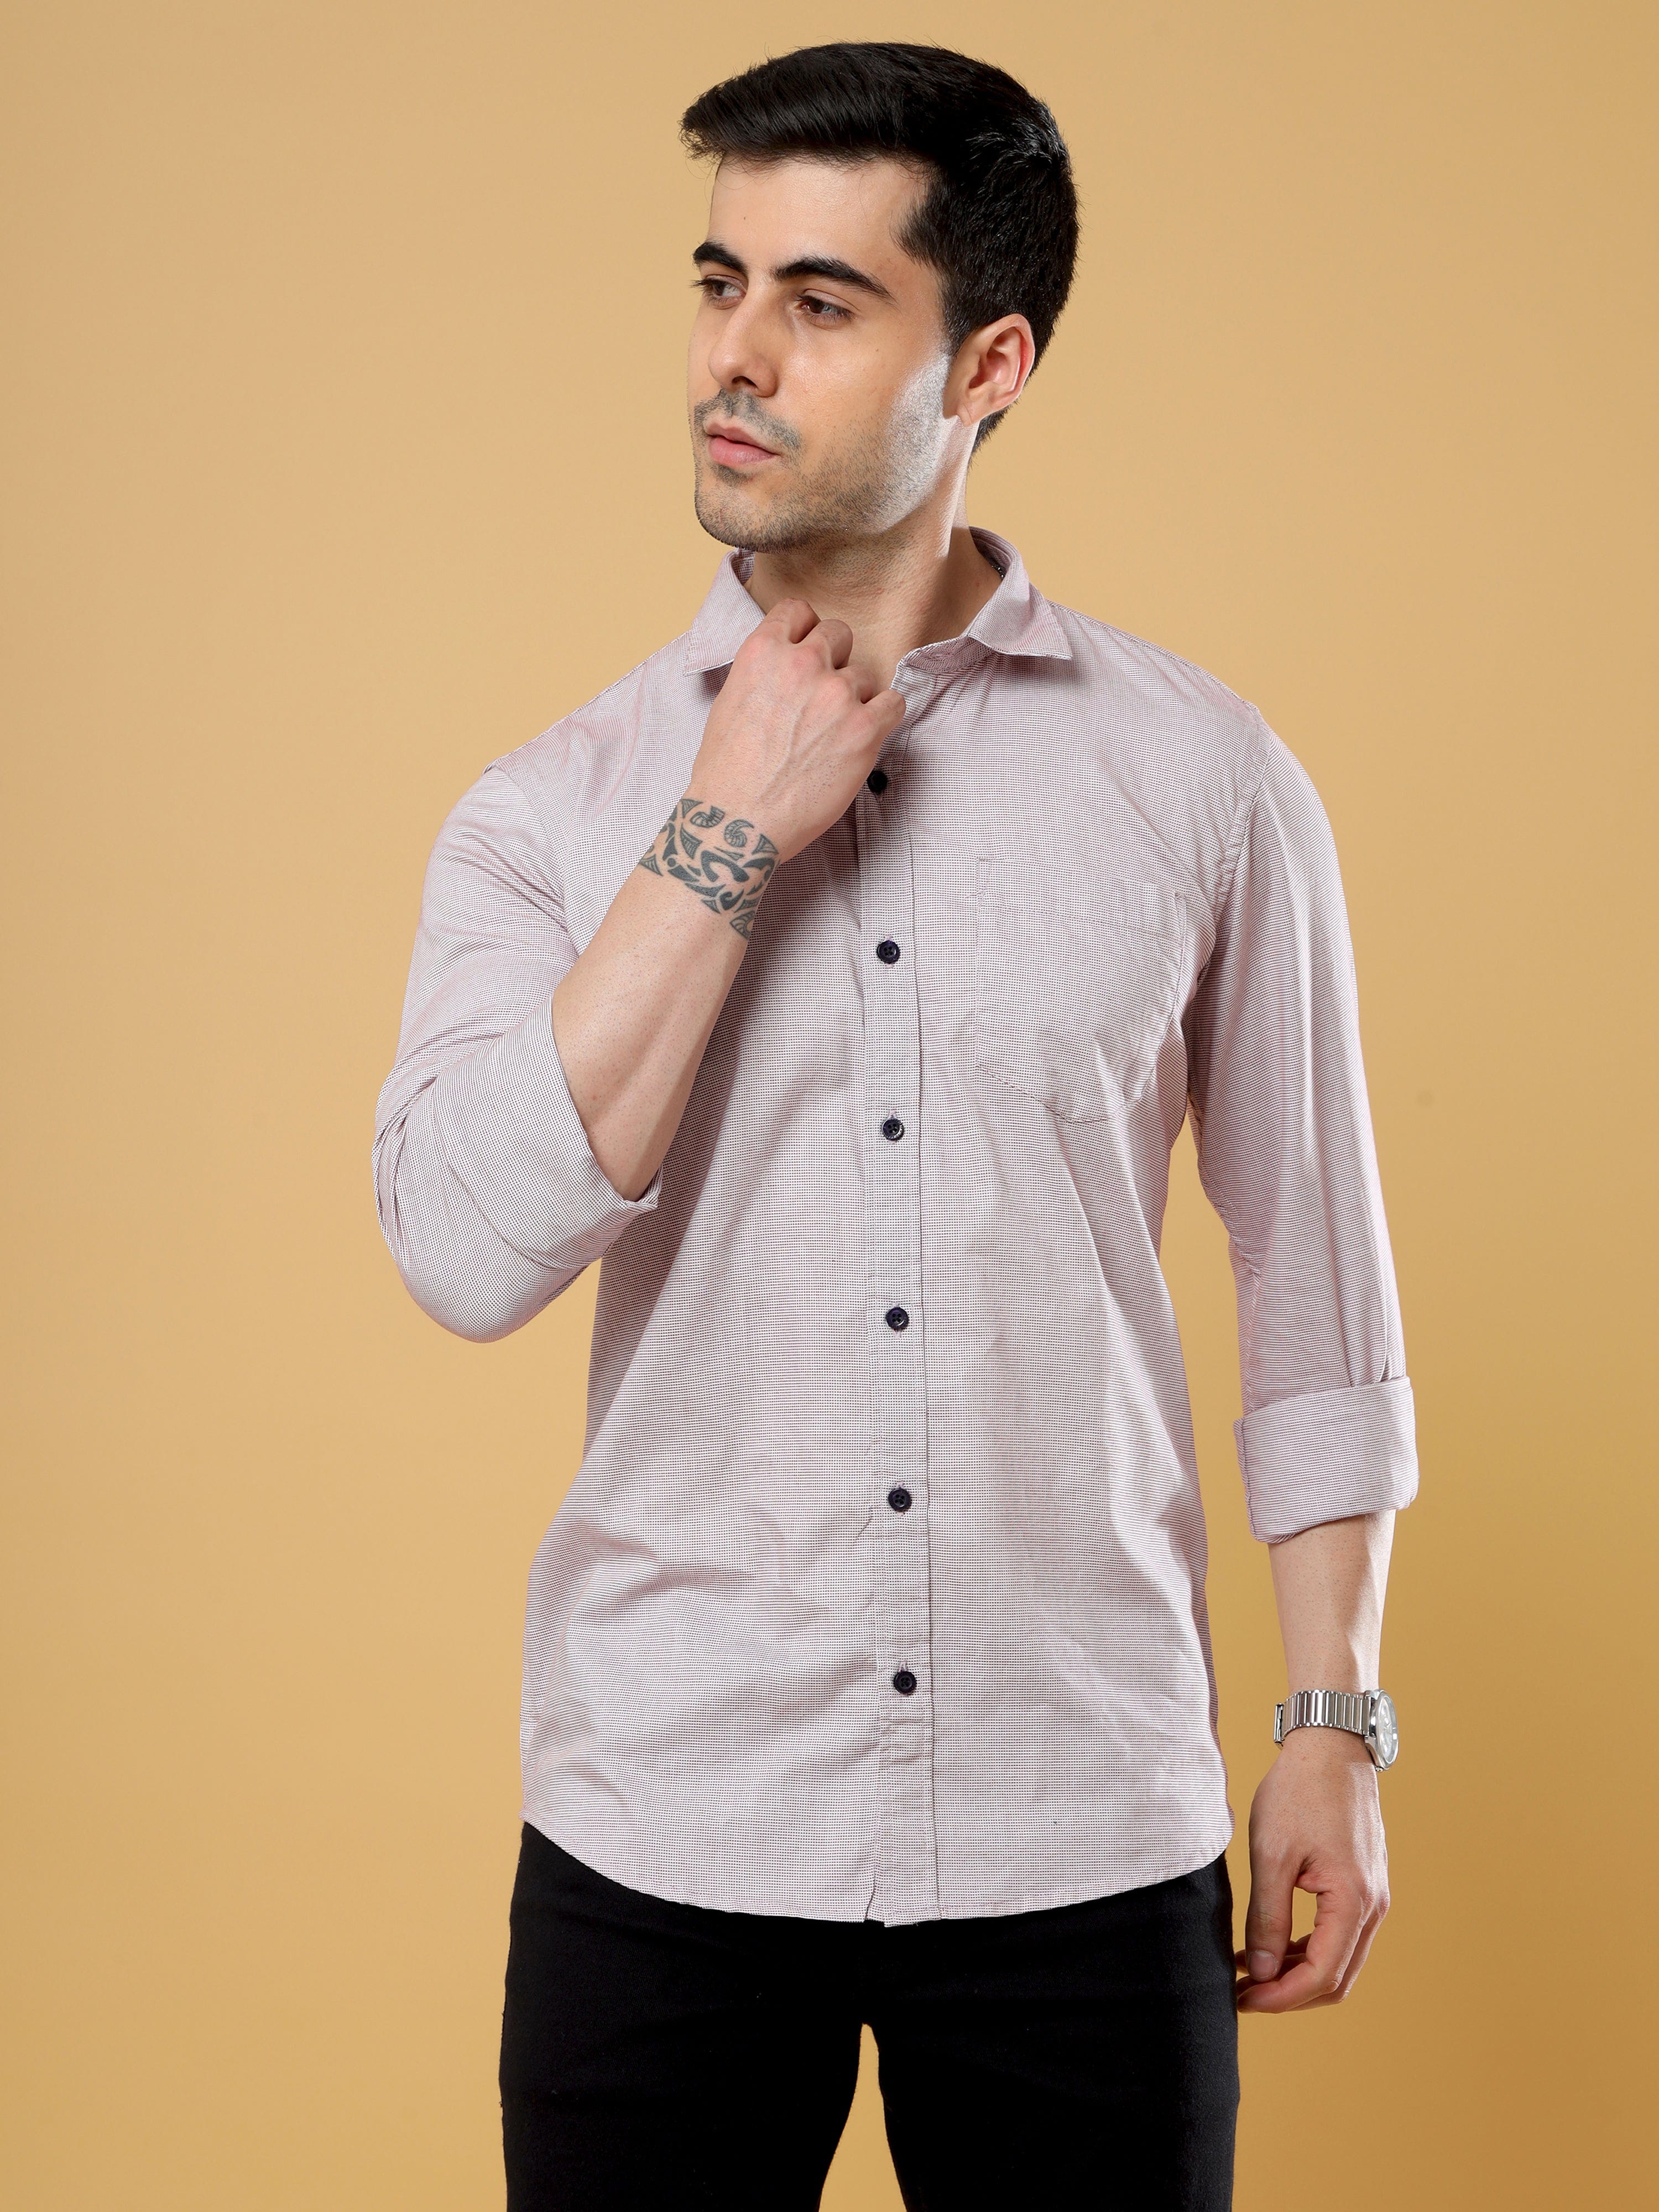 Textured Dobby Pin Checks Shirt | Men's Casual Shirts ChecksRs. 899.00